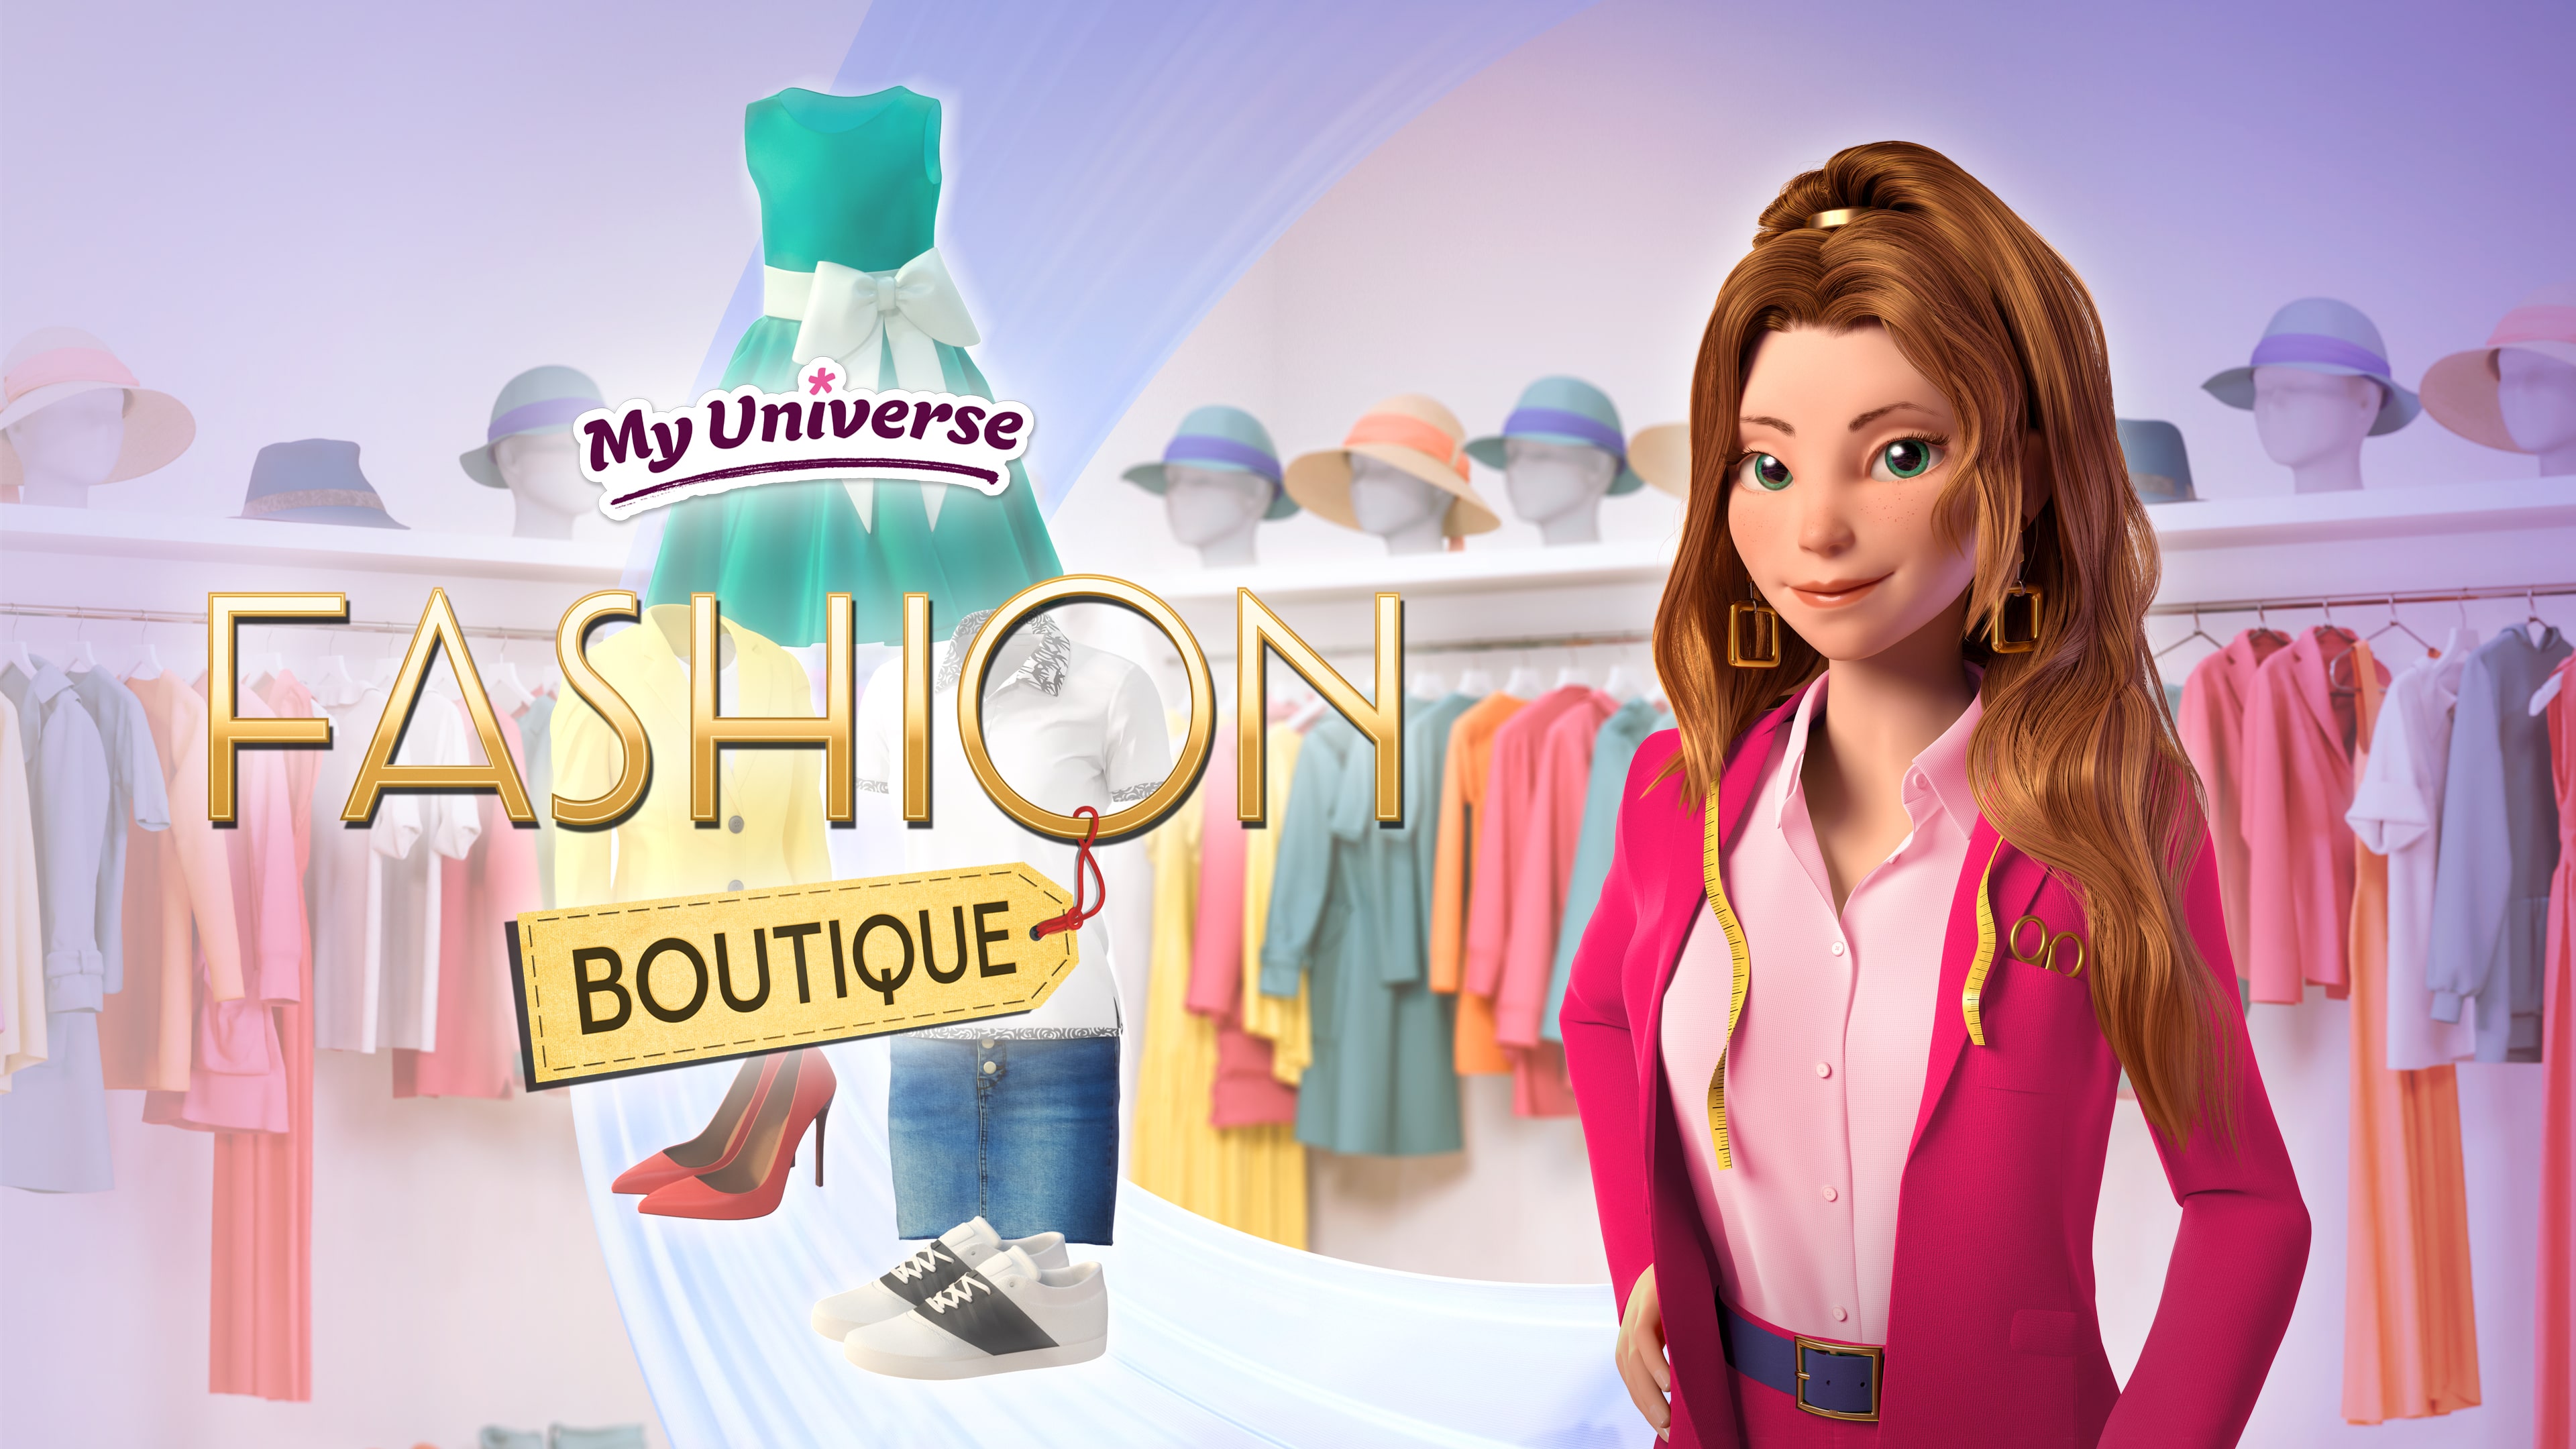 My Universe - Fashion Boutique